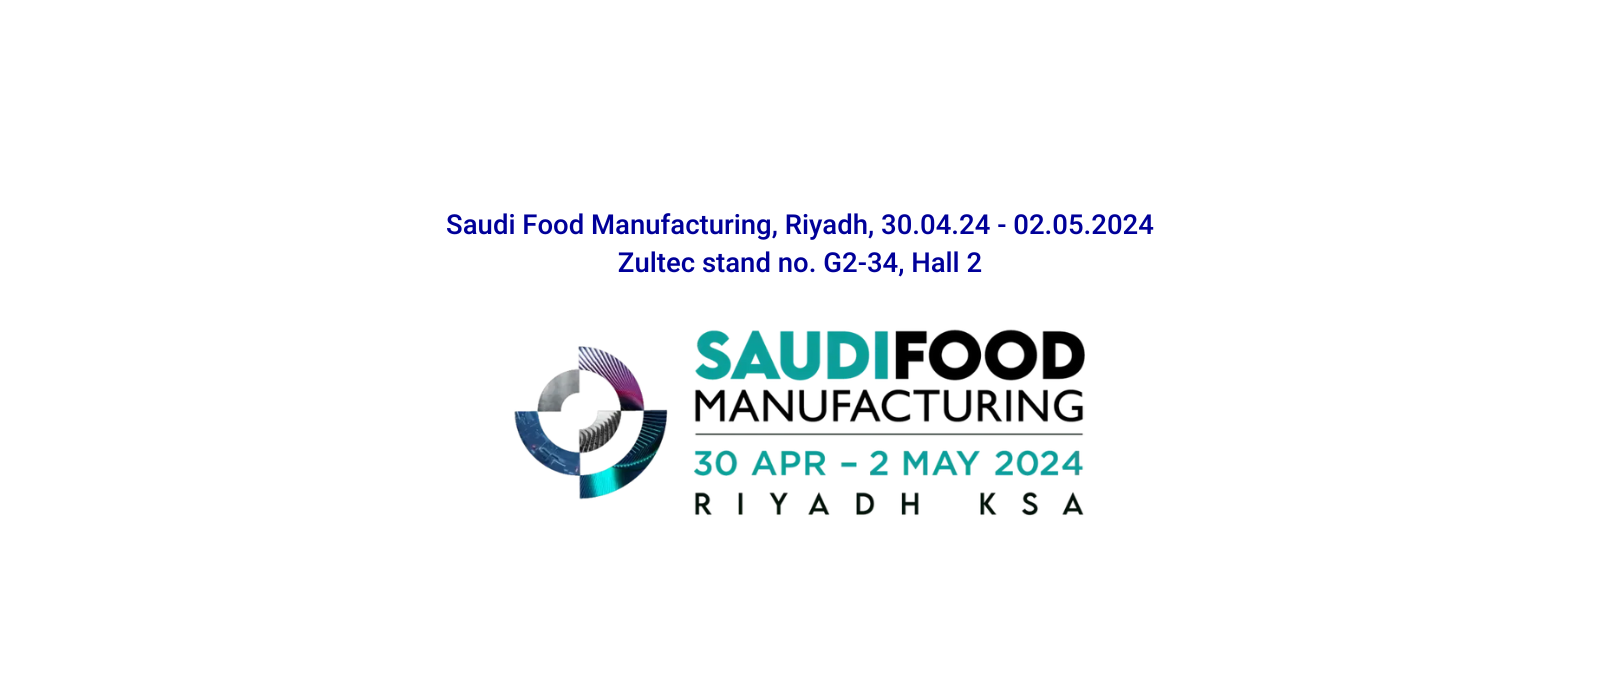 Saudi Food Manufacturing: nuovo appuntamento per Gruppo Fabbri